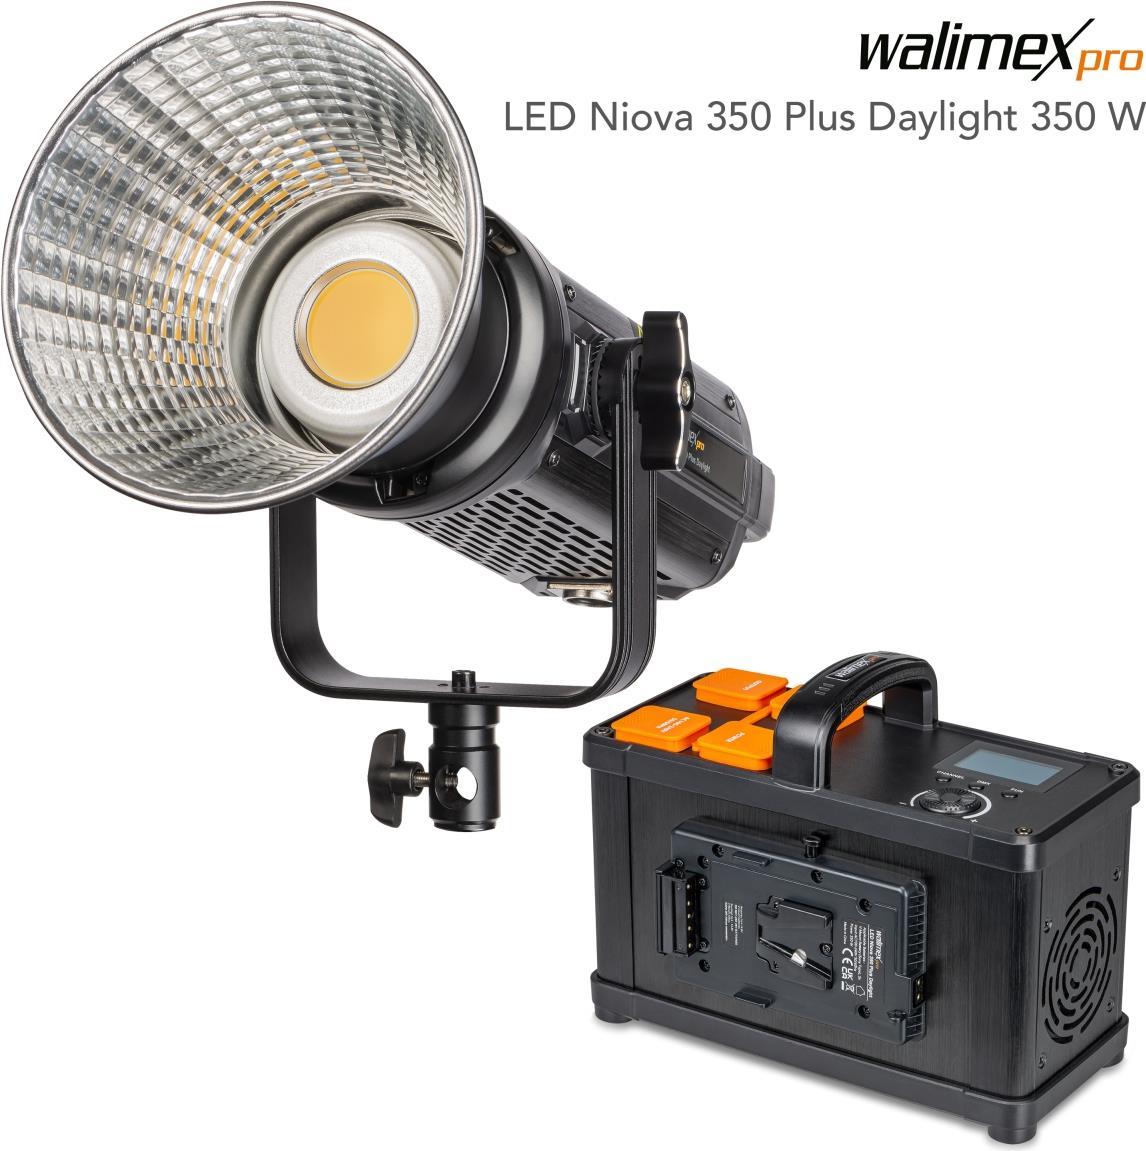 WALSER Walimex pro LED Niova 350 Plus Daylight 350W (23099)